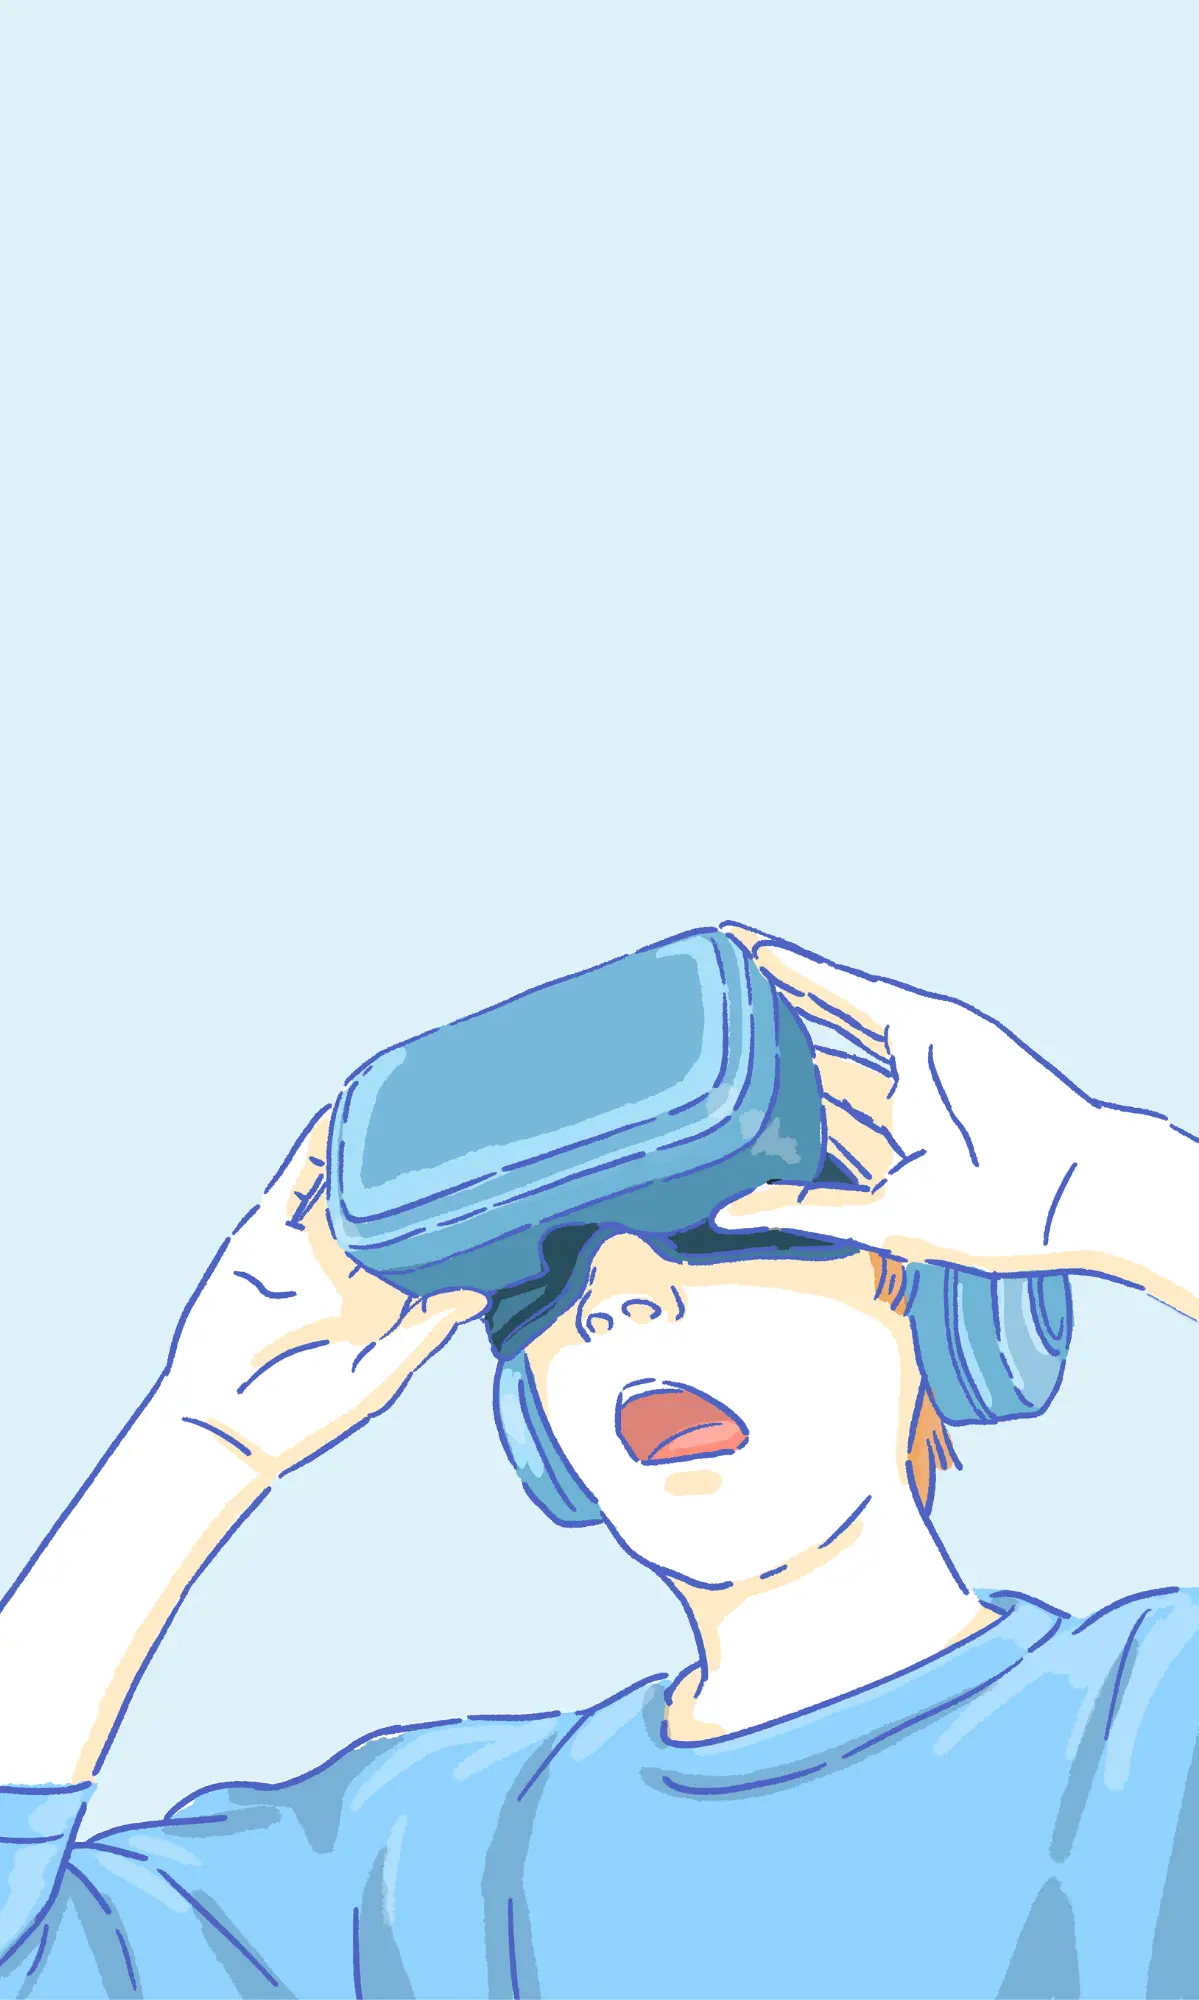 VR journey